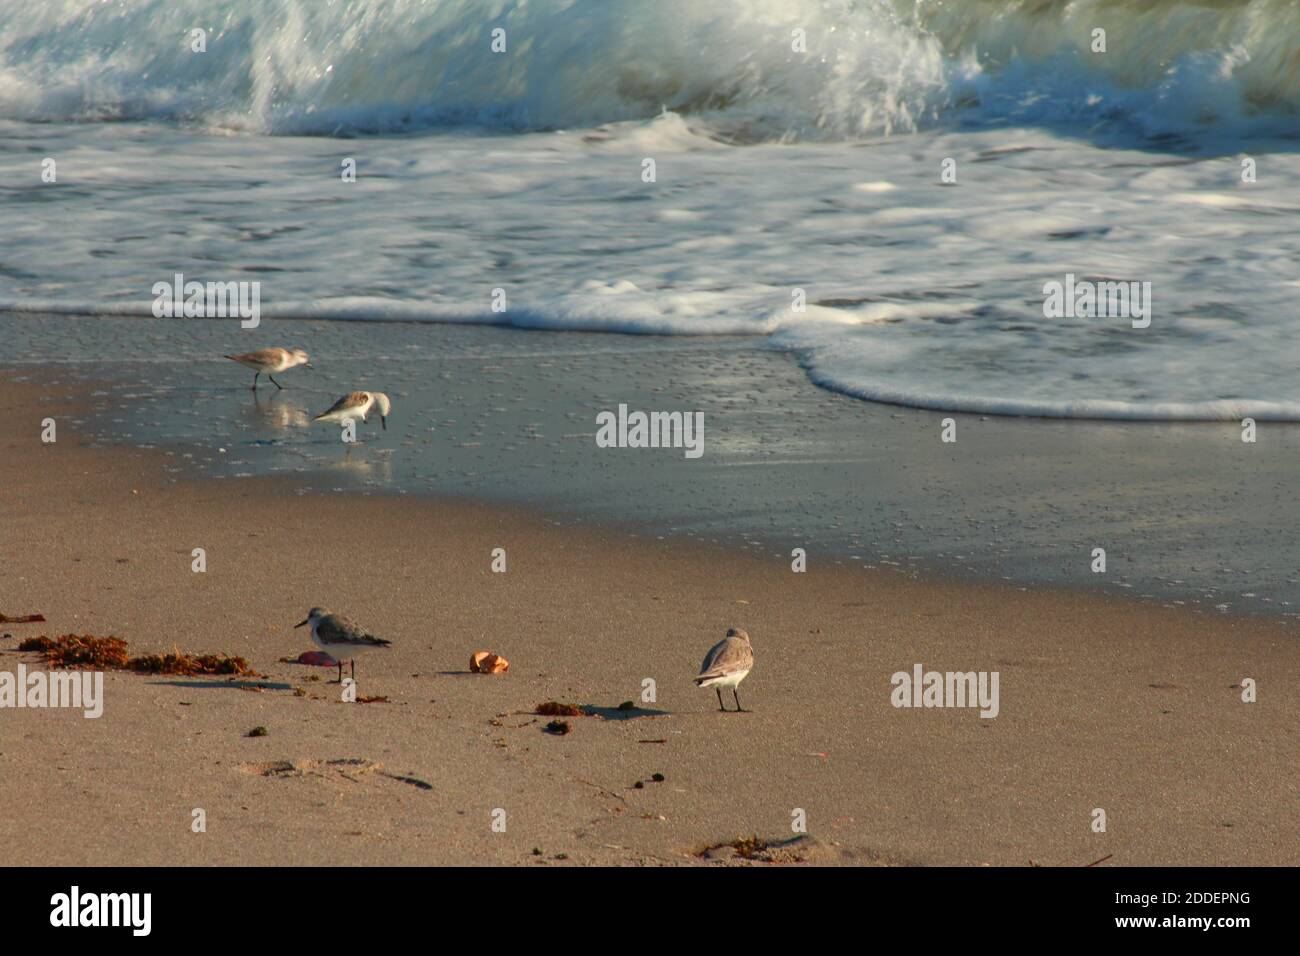 Birds by the waves - medium shot Stock Photo